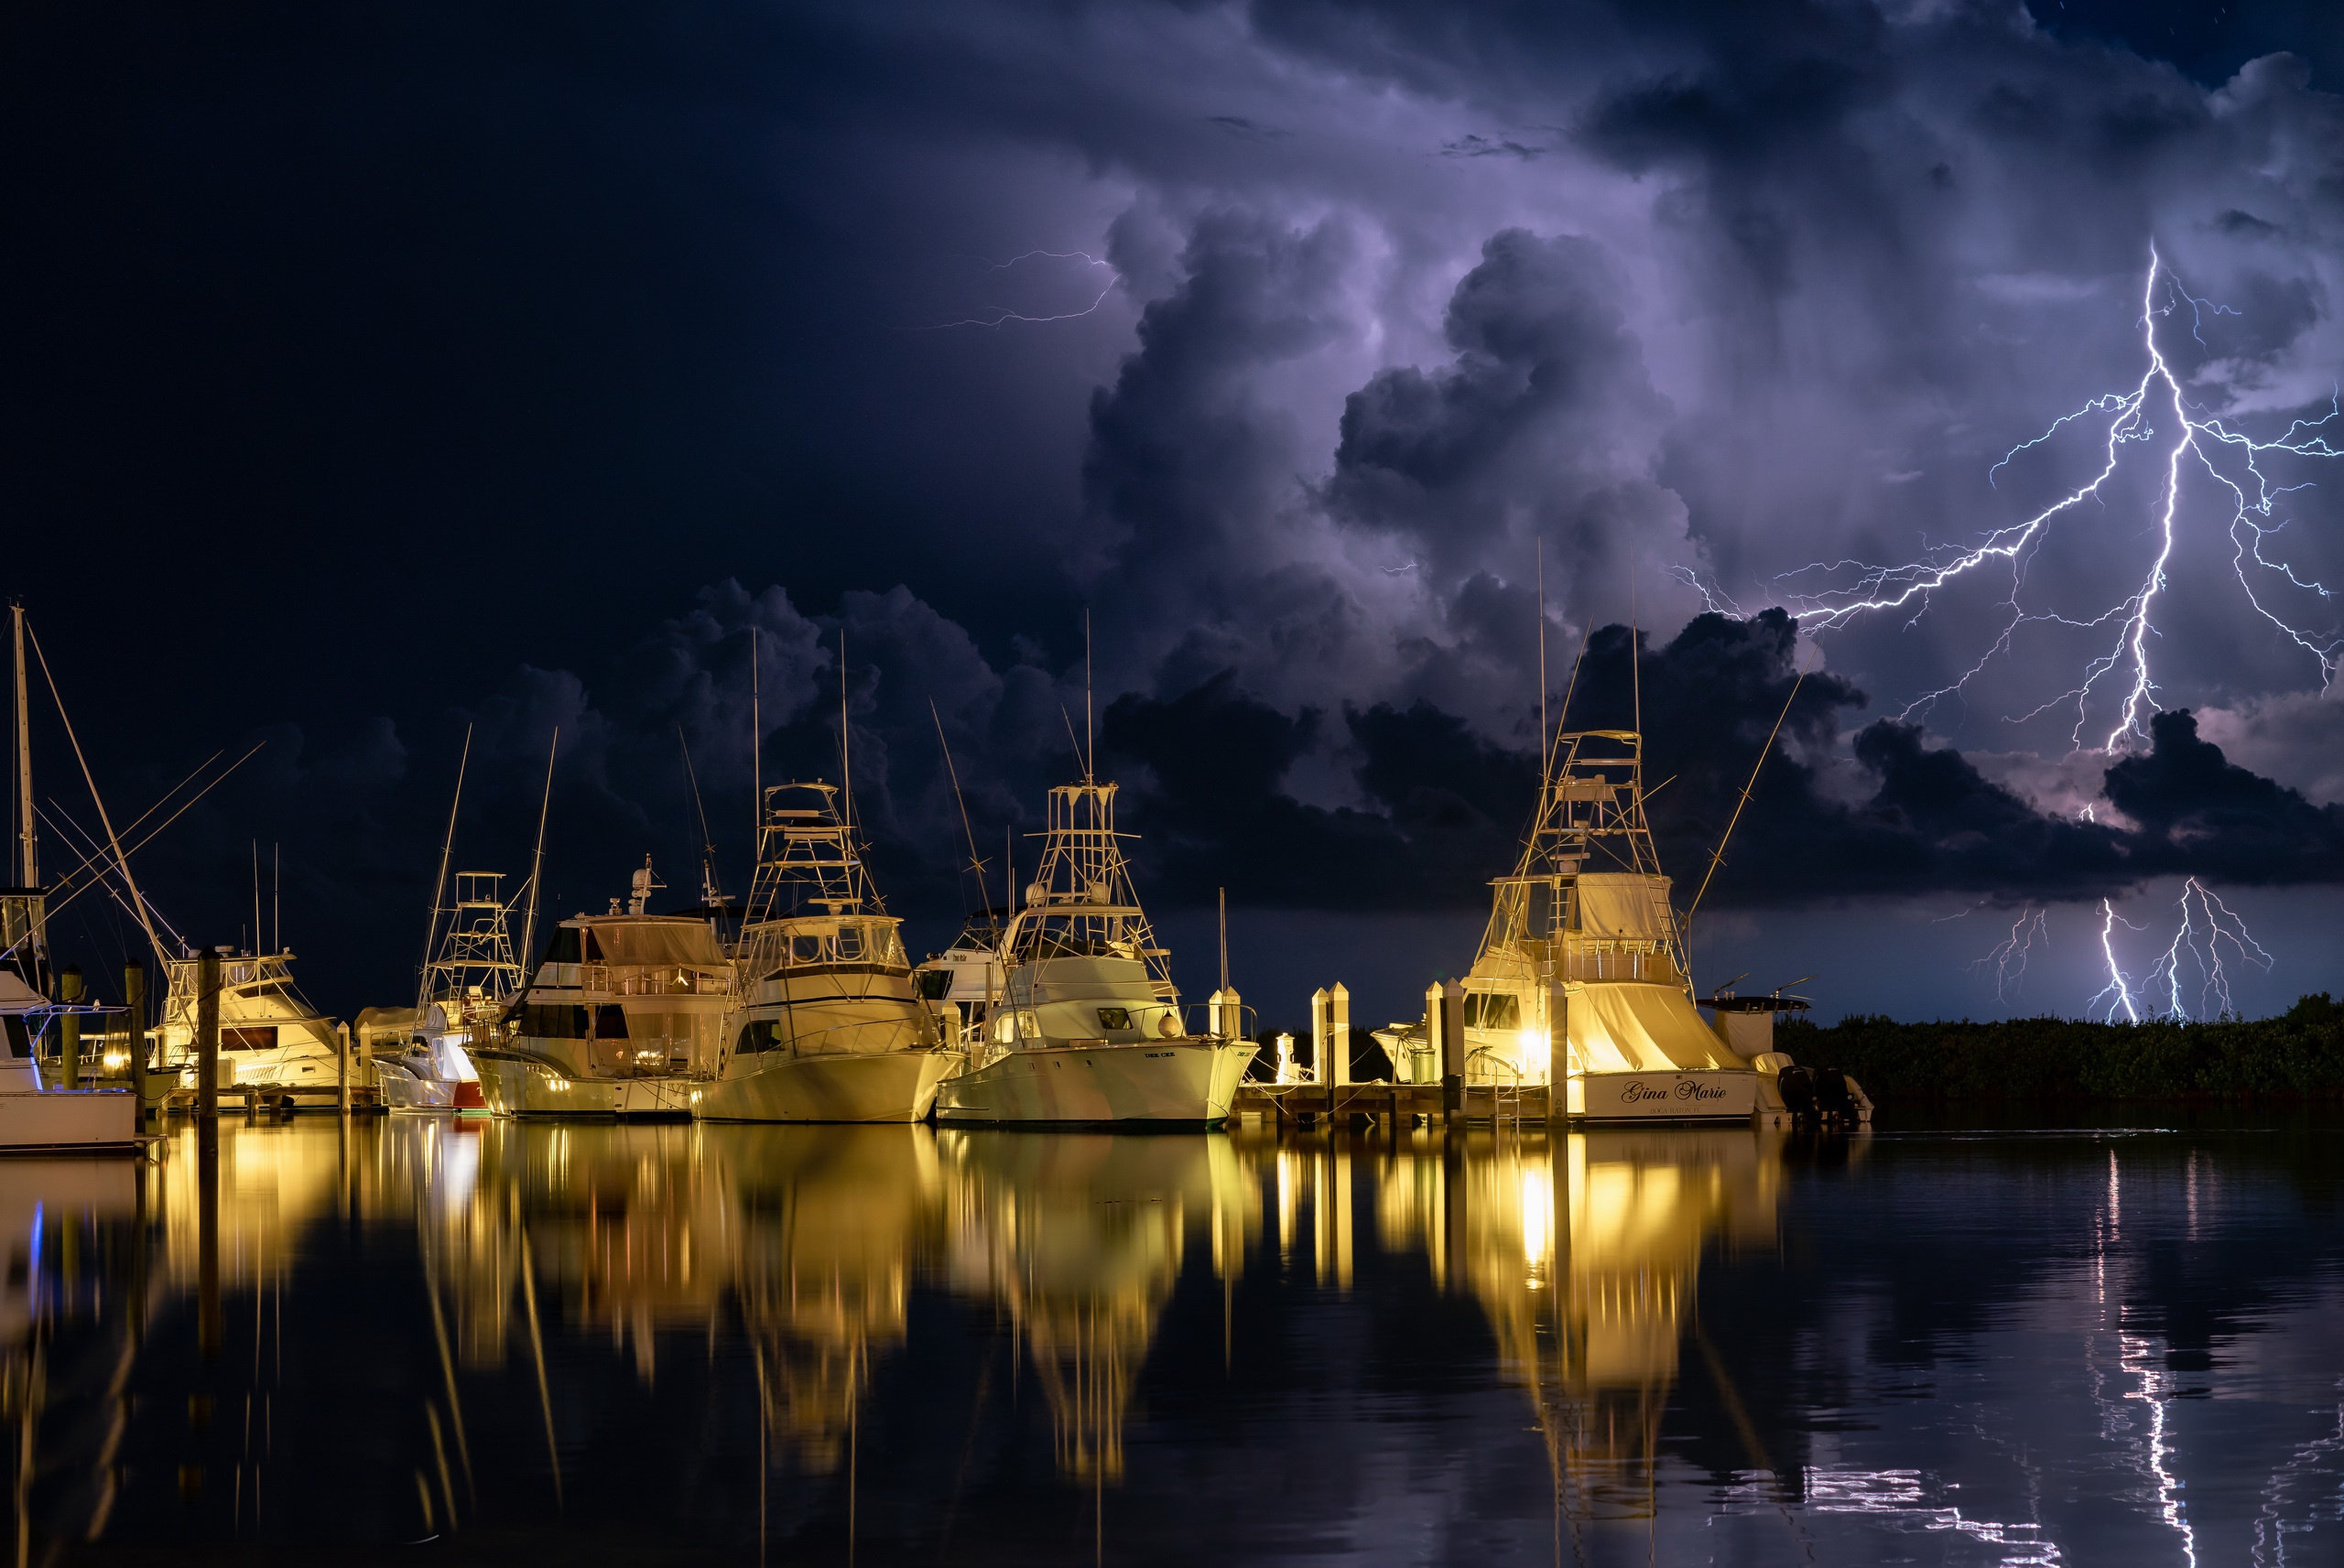 General 2560x1713 thunderbolt ship lightning nature reflection low light